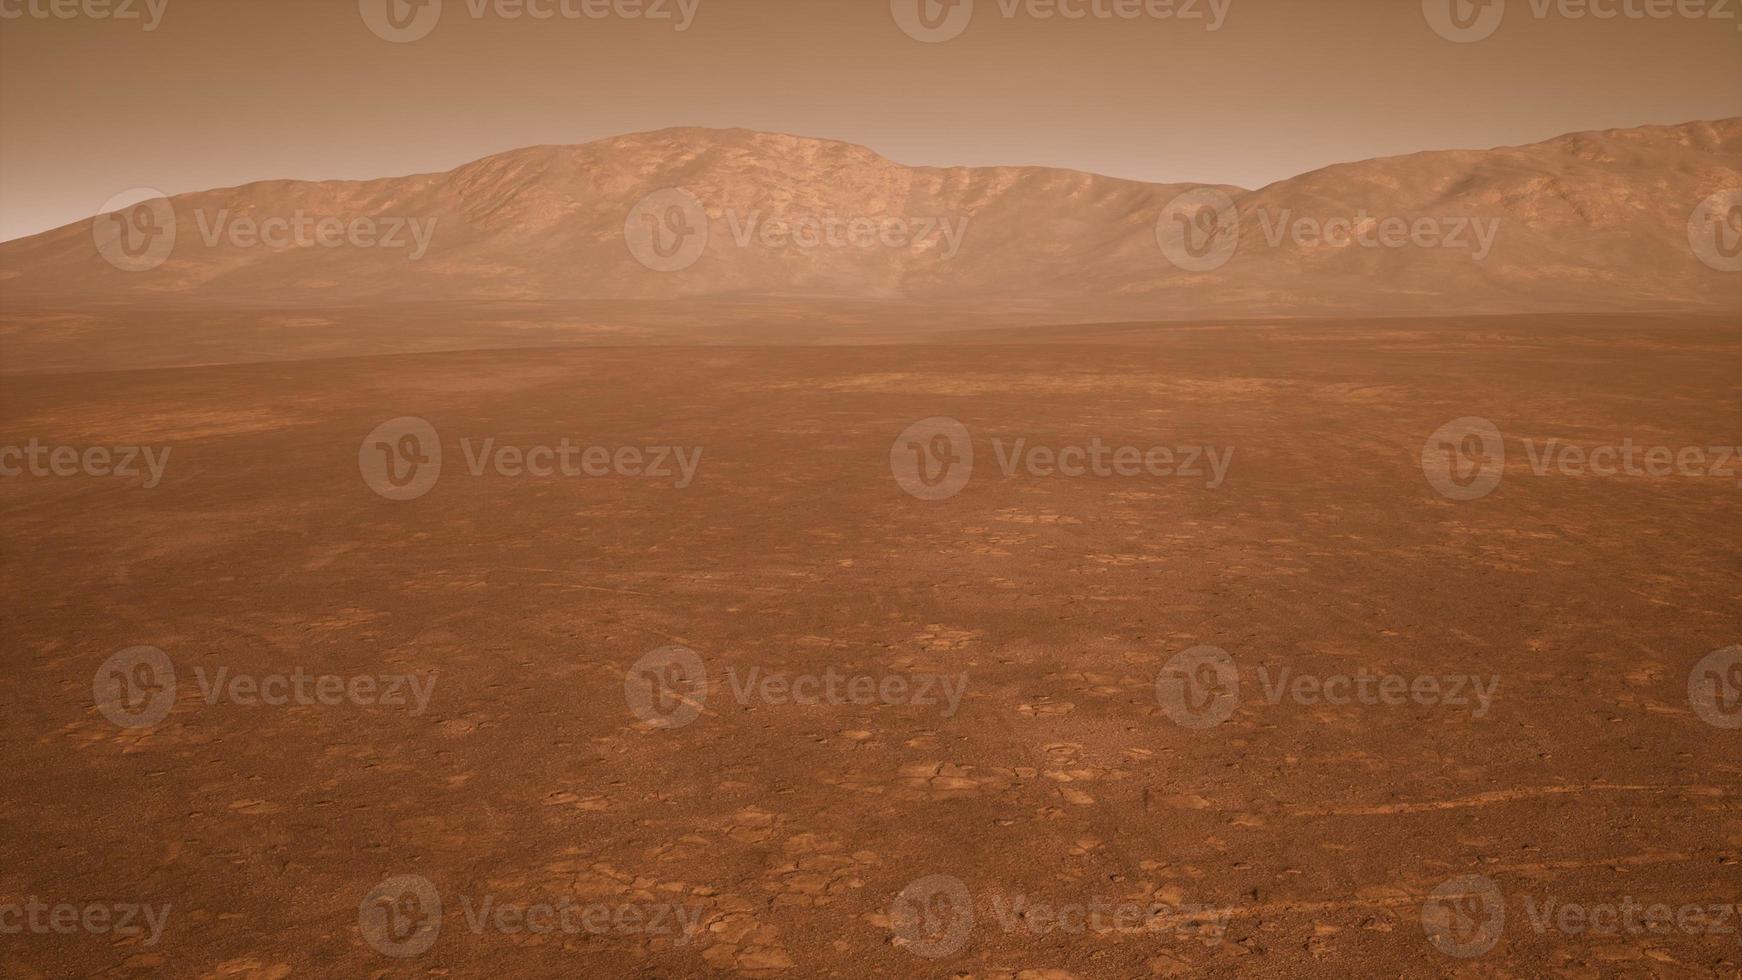 fantástica paisagem marciana em tons de laranja enferrujados foto